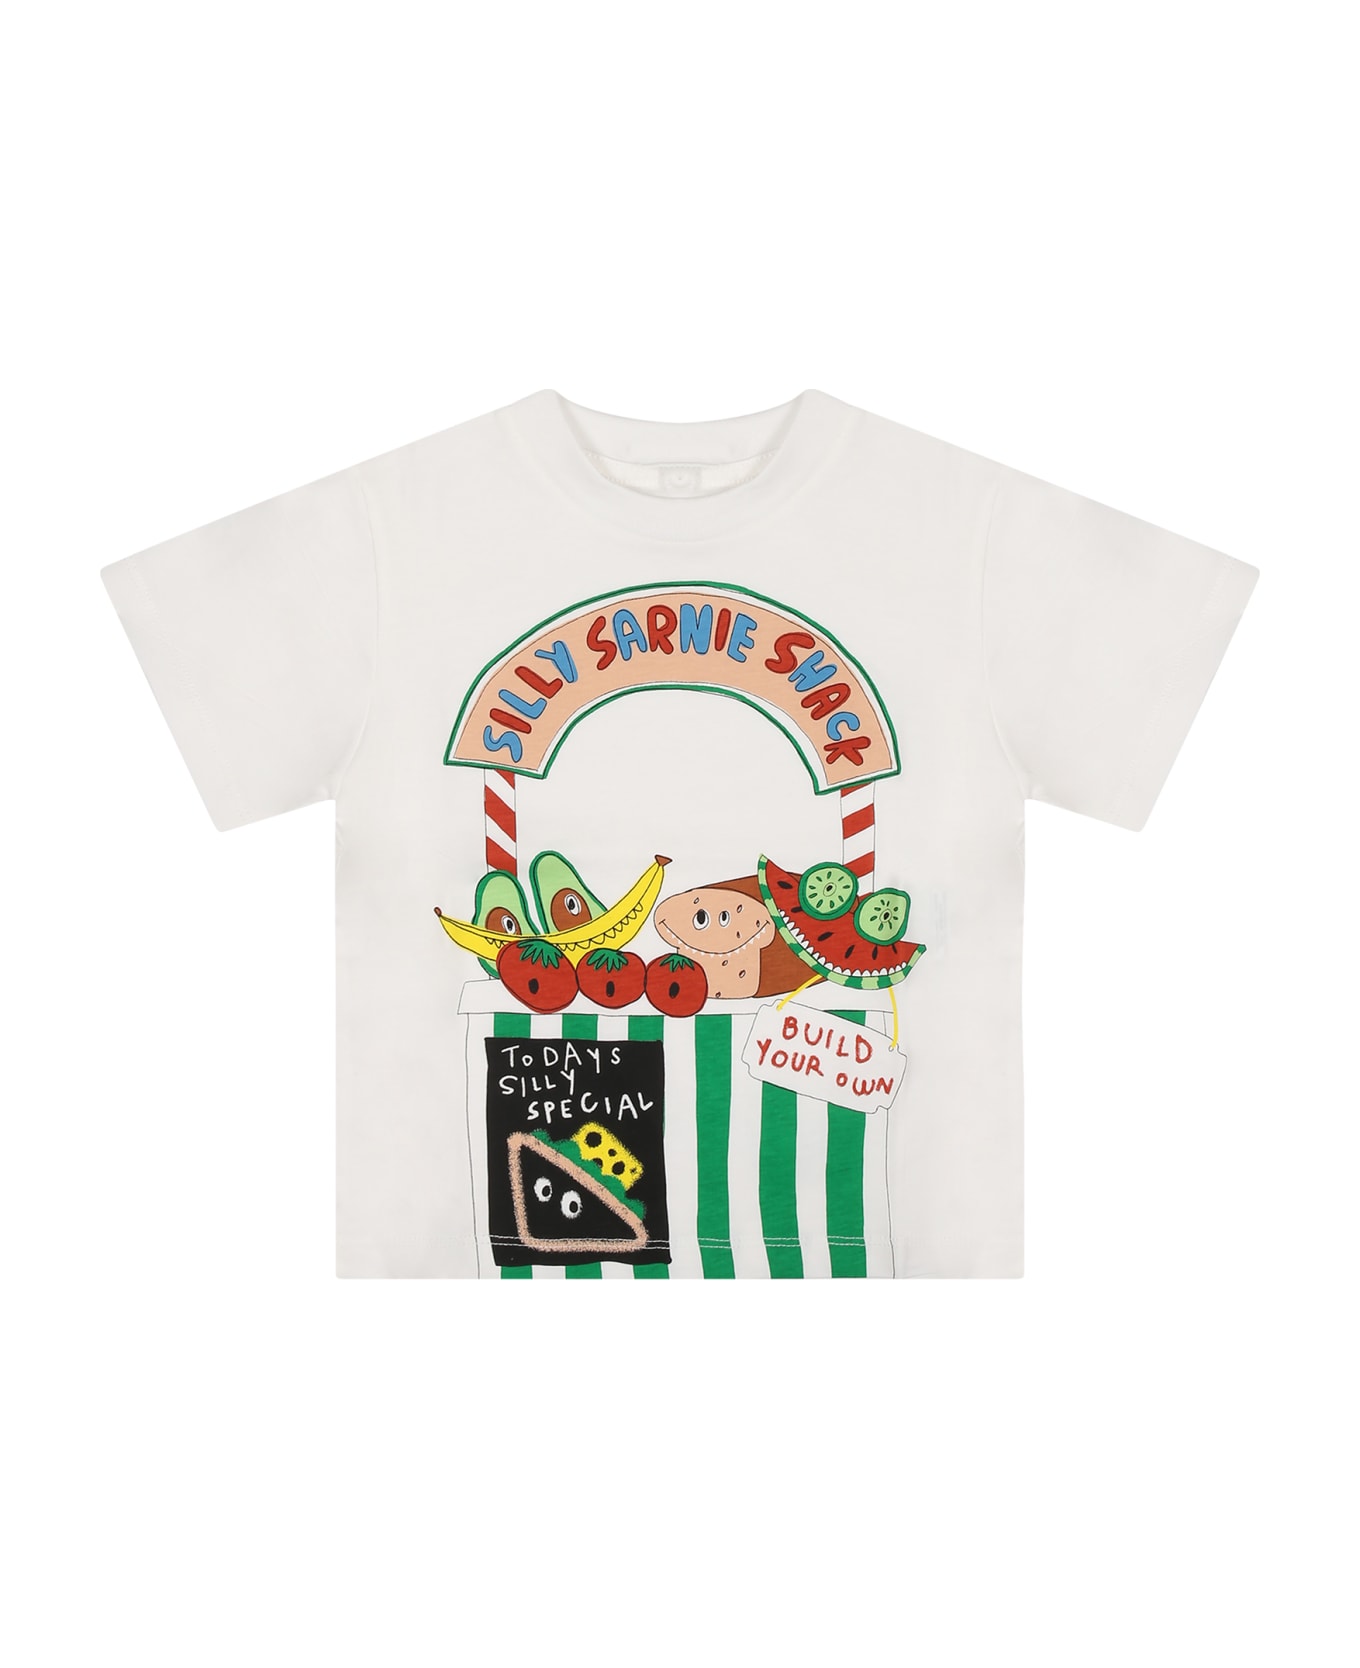 Stella McCartney Kids White T-shirt For Baby Boy With Fruit Print - White